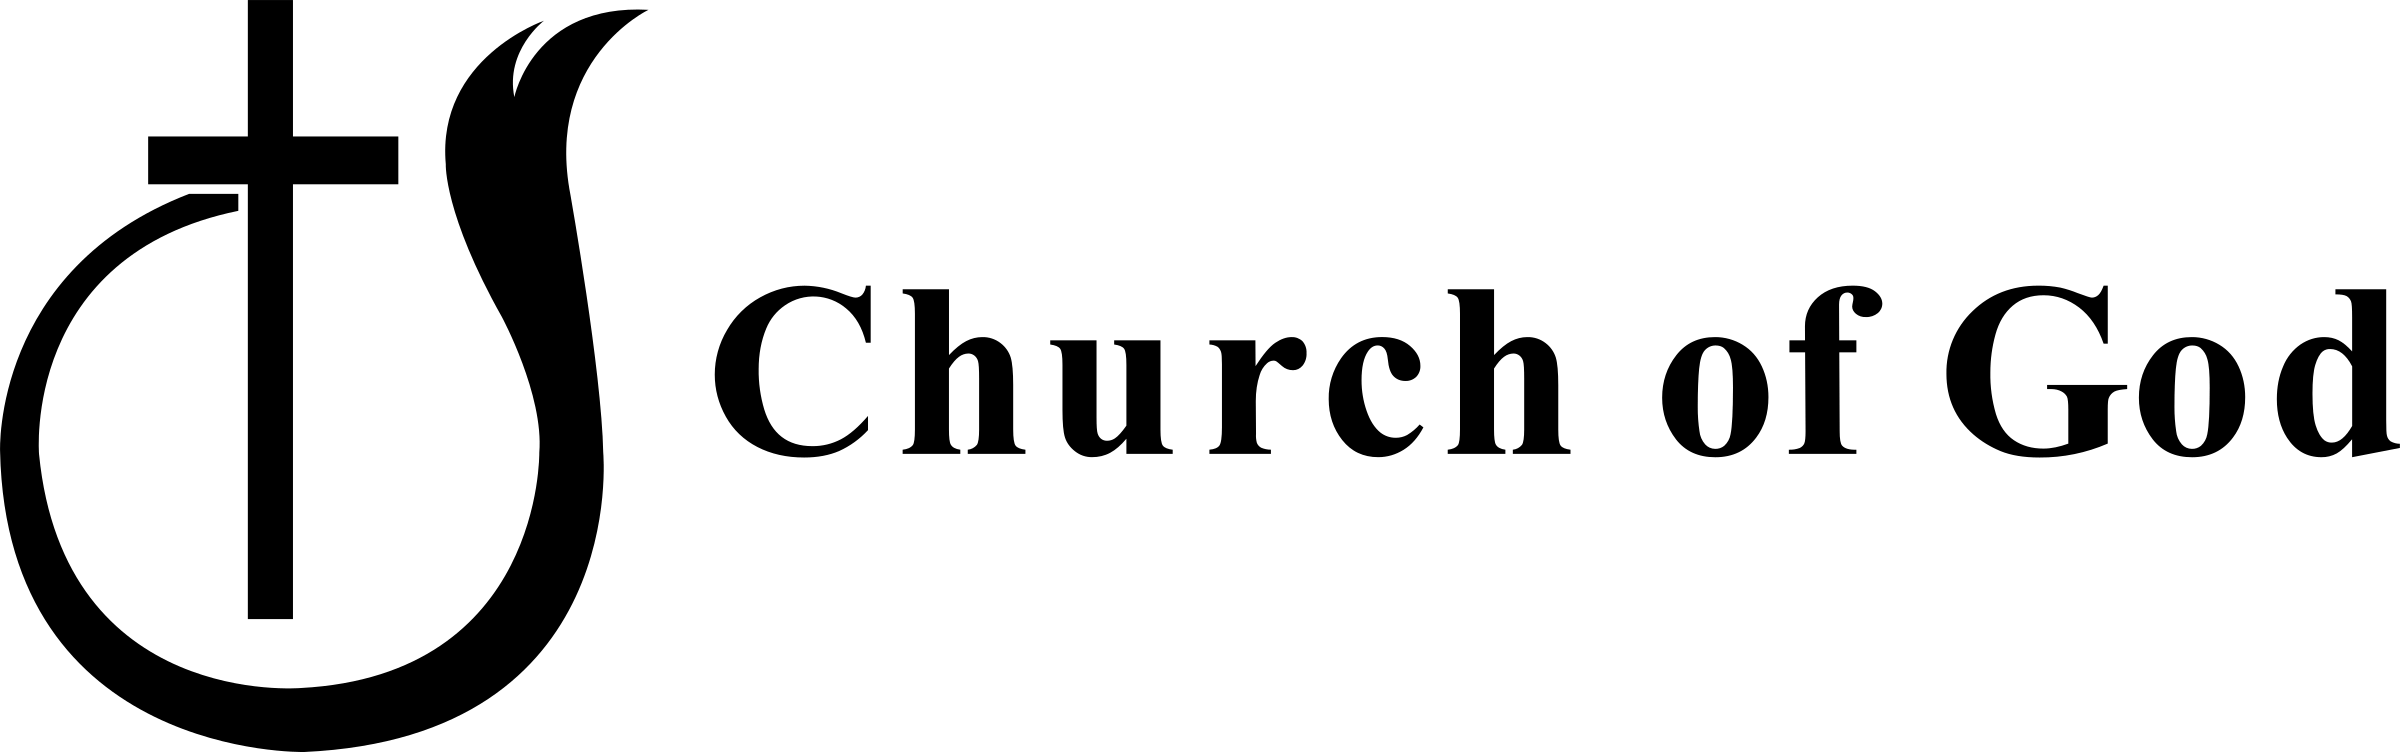 Black Church of God Logo - church of god Logo PNG Transparent & SVG Vector